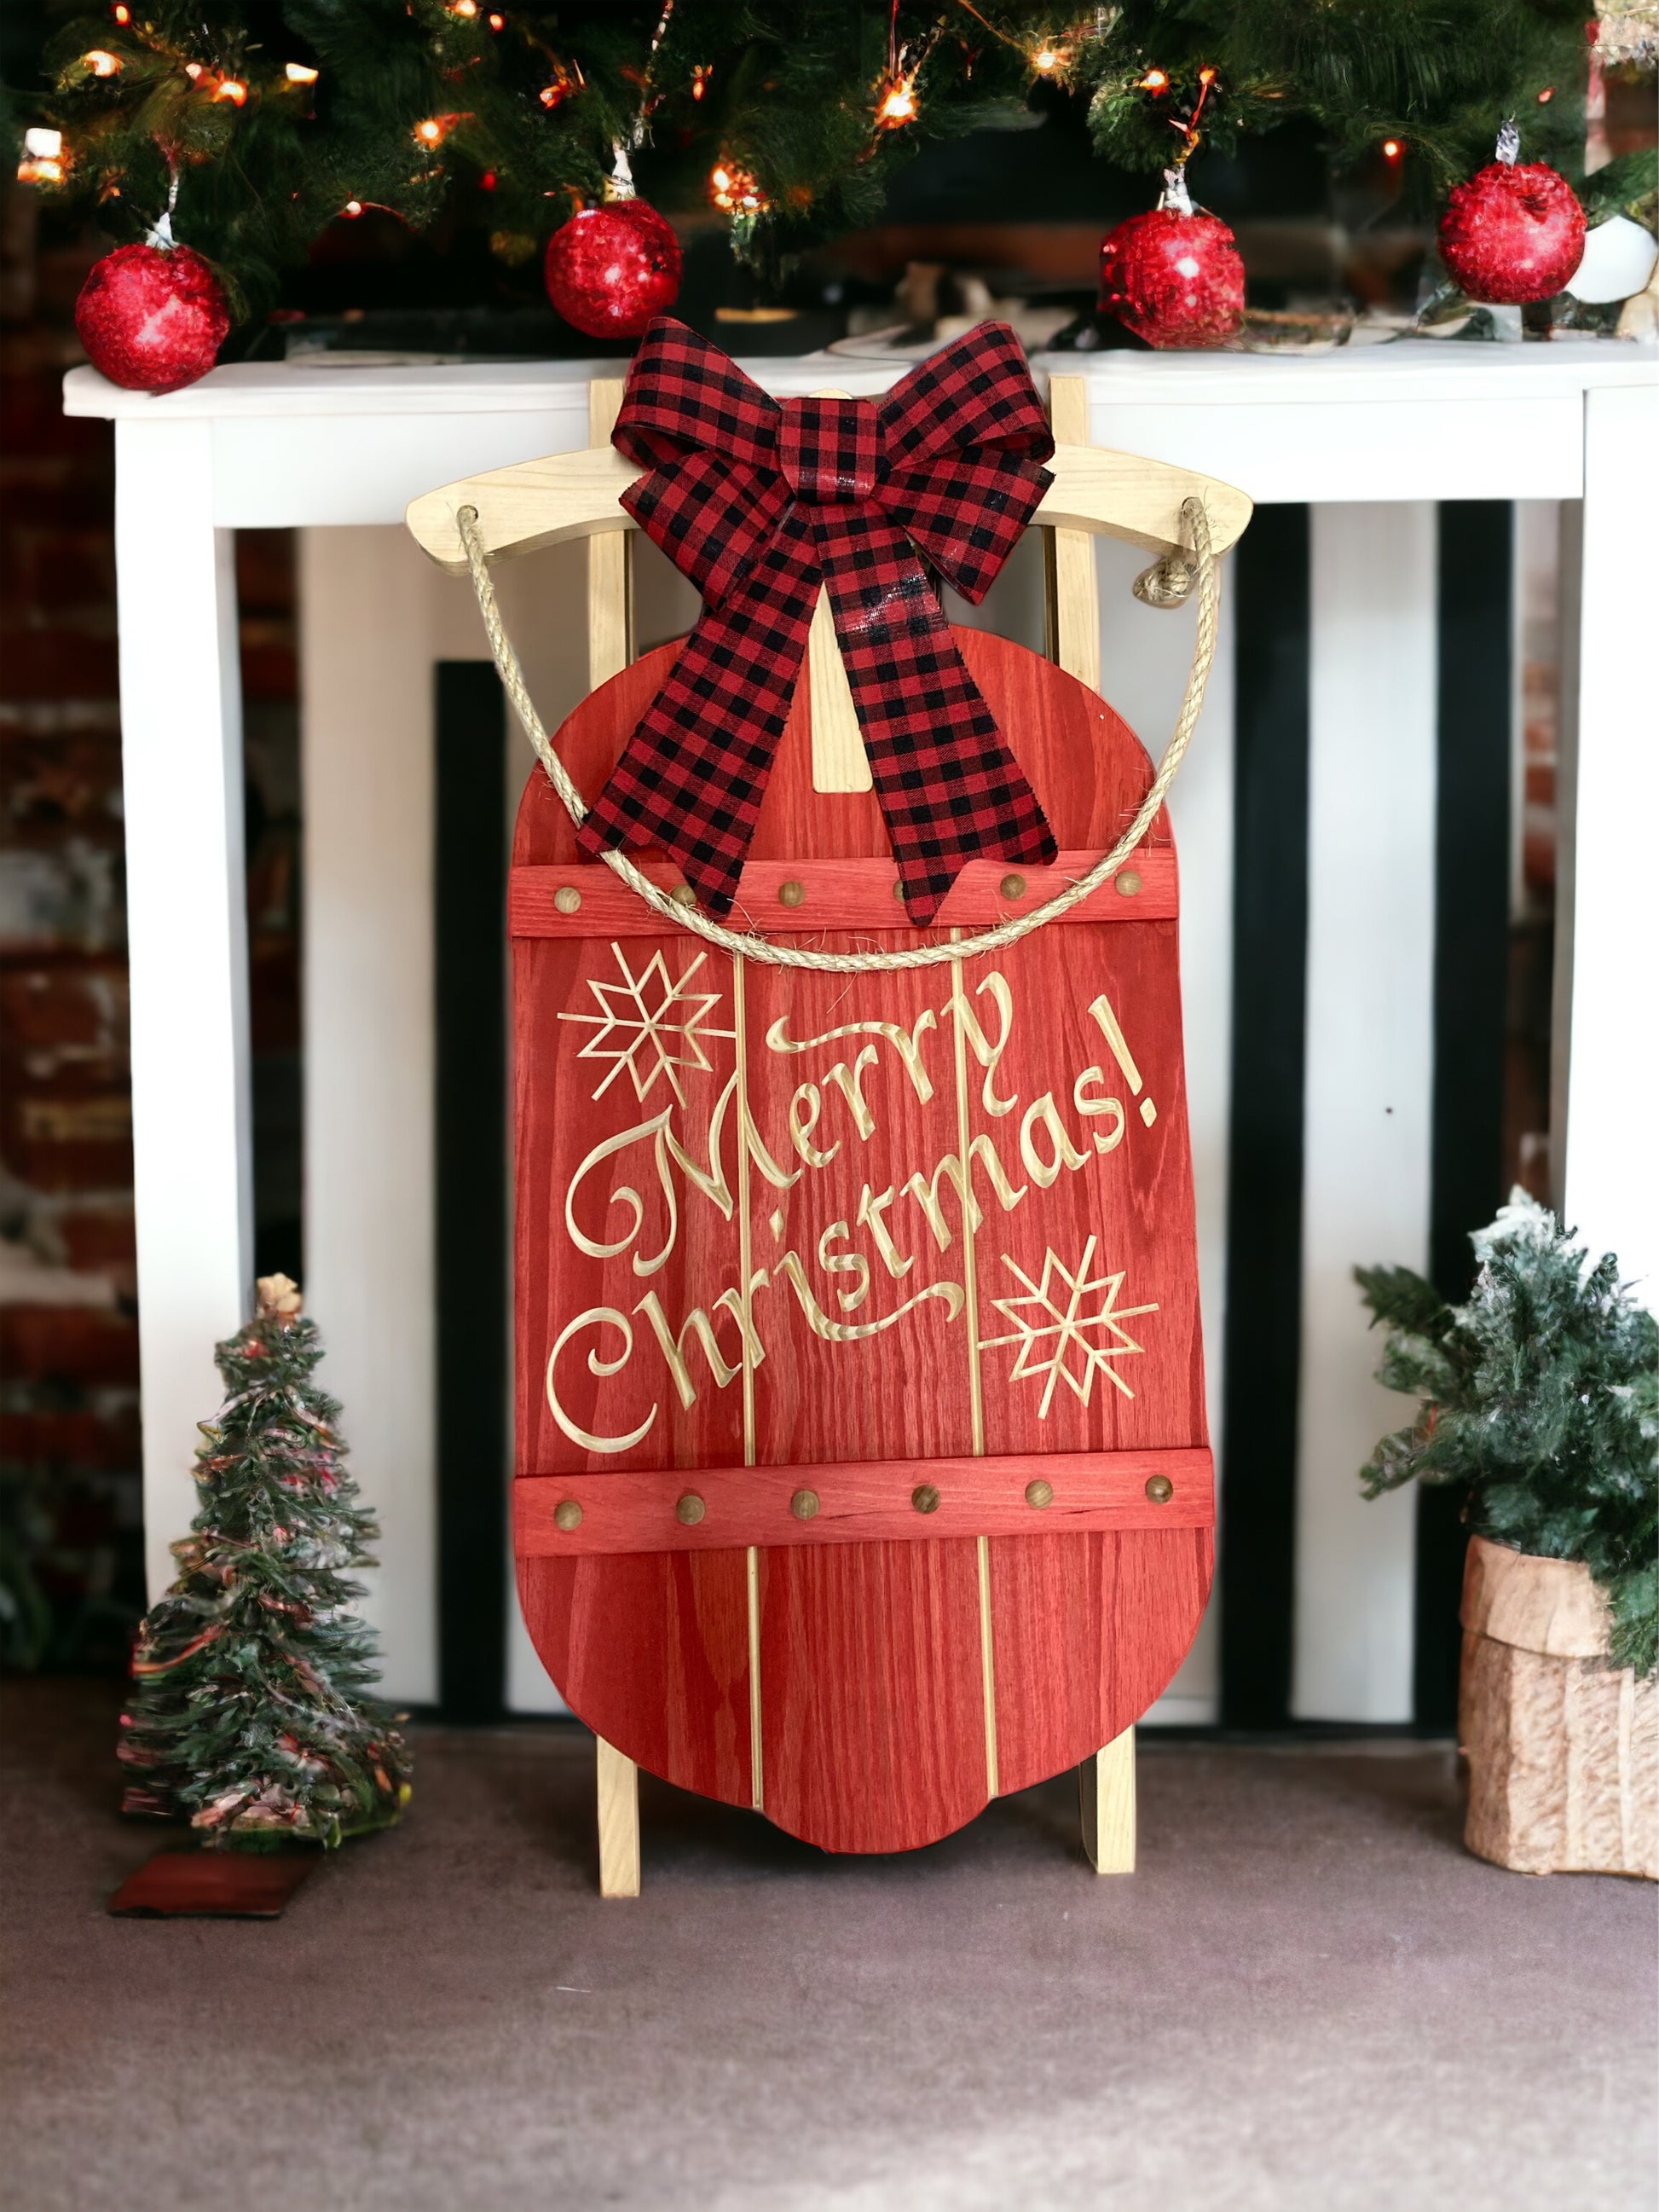 "Merry Christmas" Wood sleigh